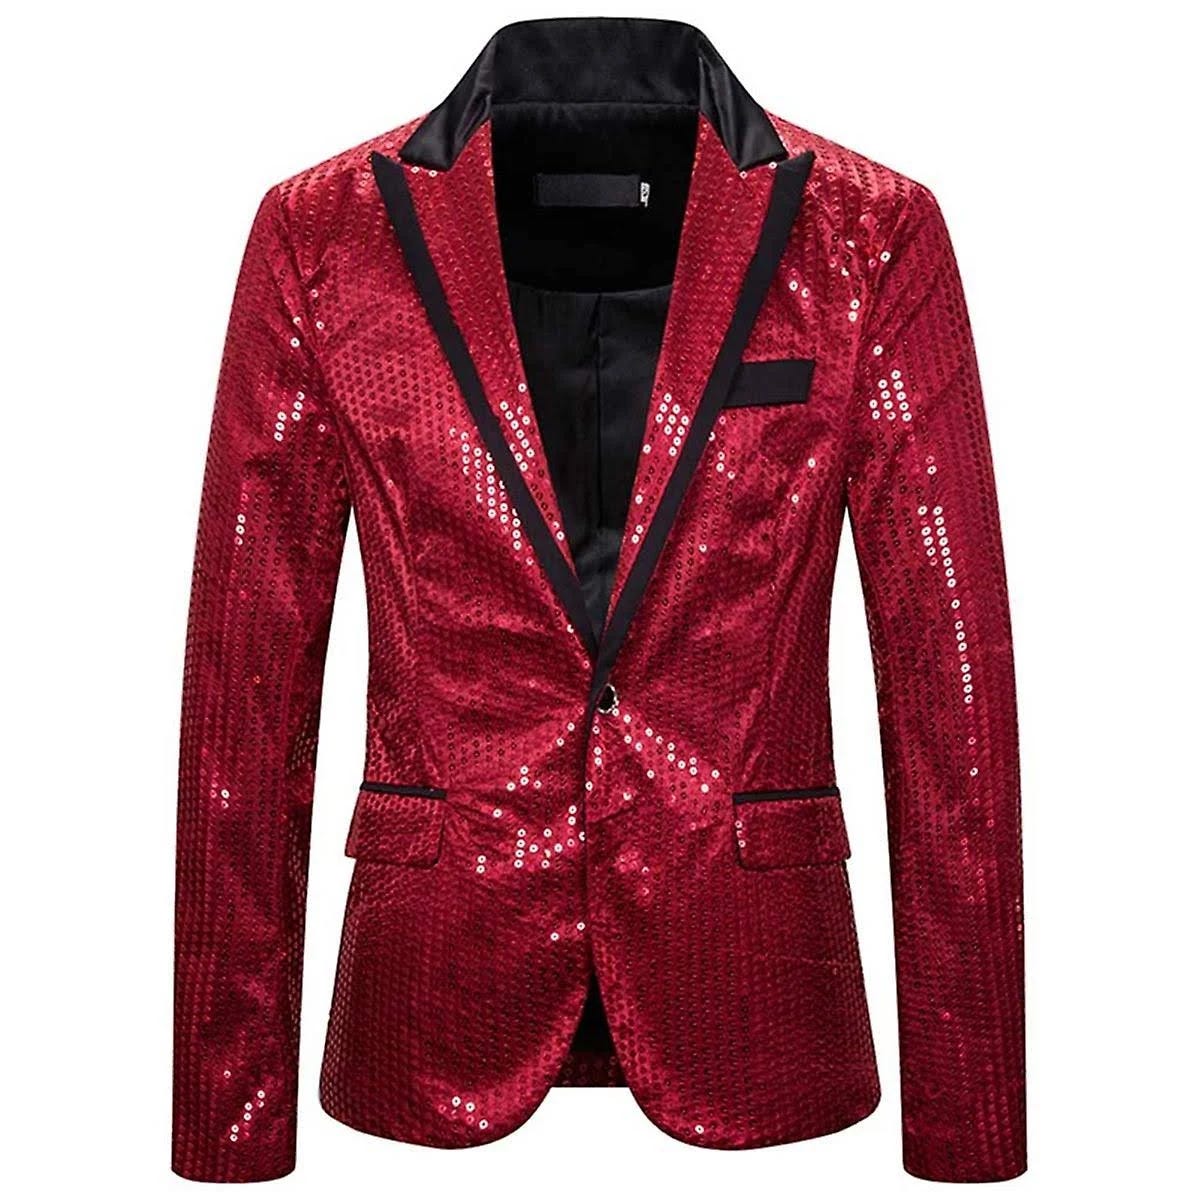 Allthemen Men's Sparkly Sequined Suit Jacket | Image